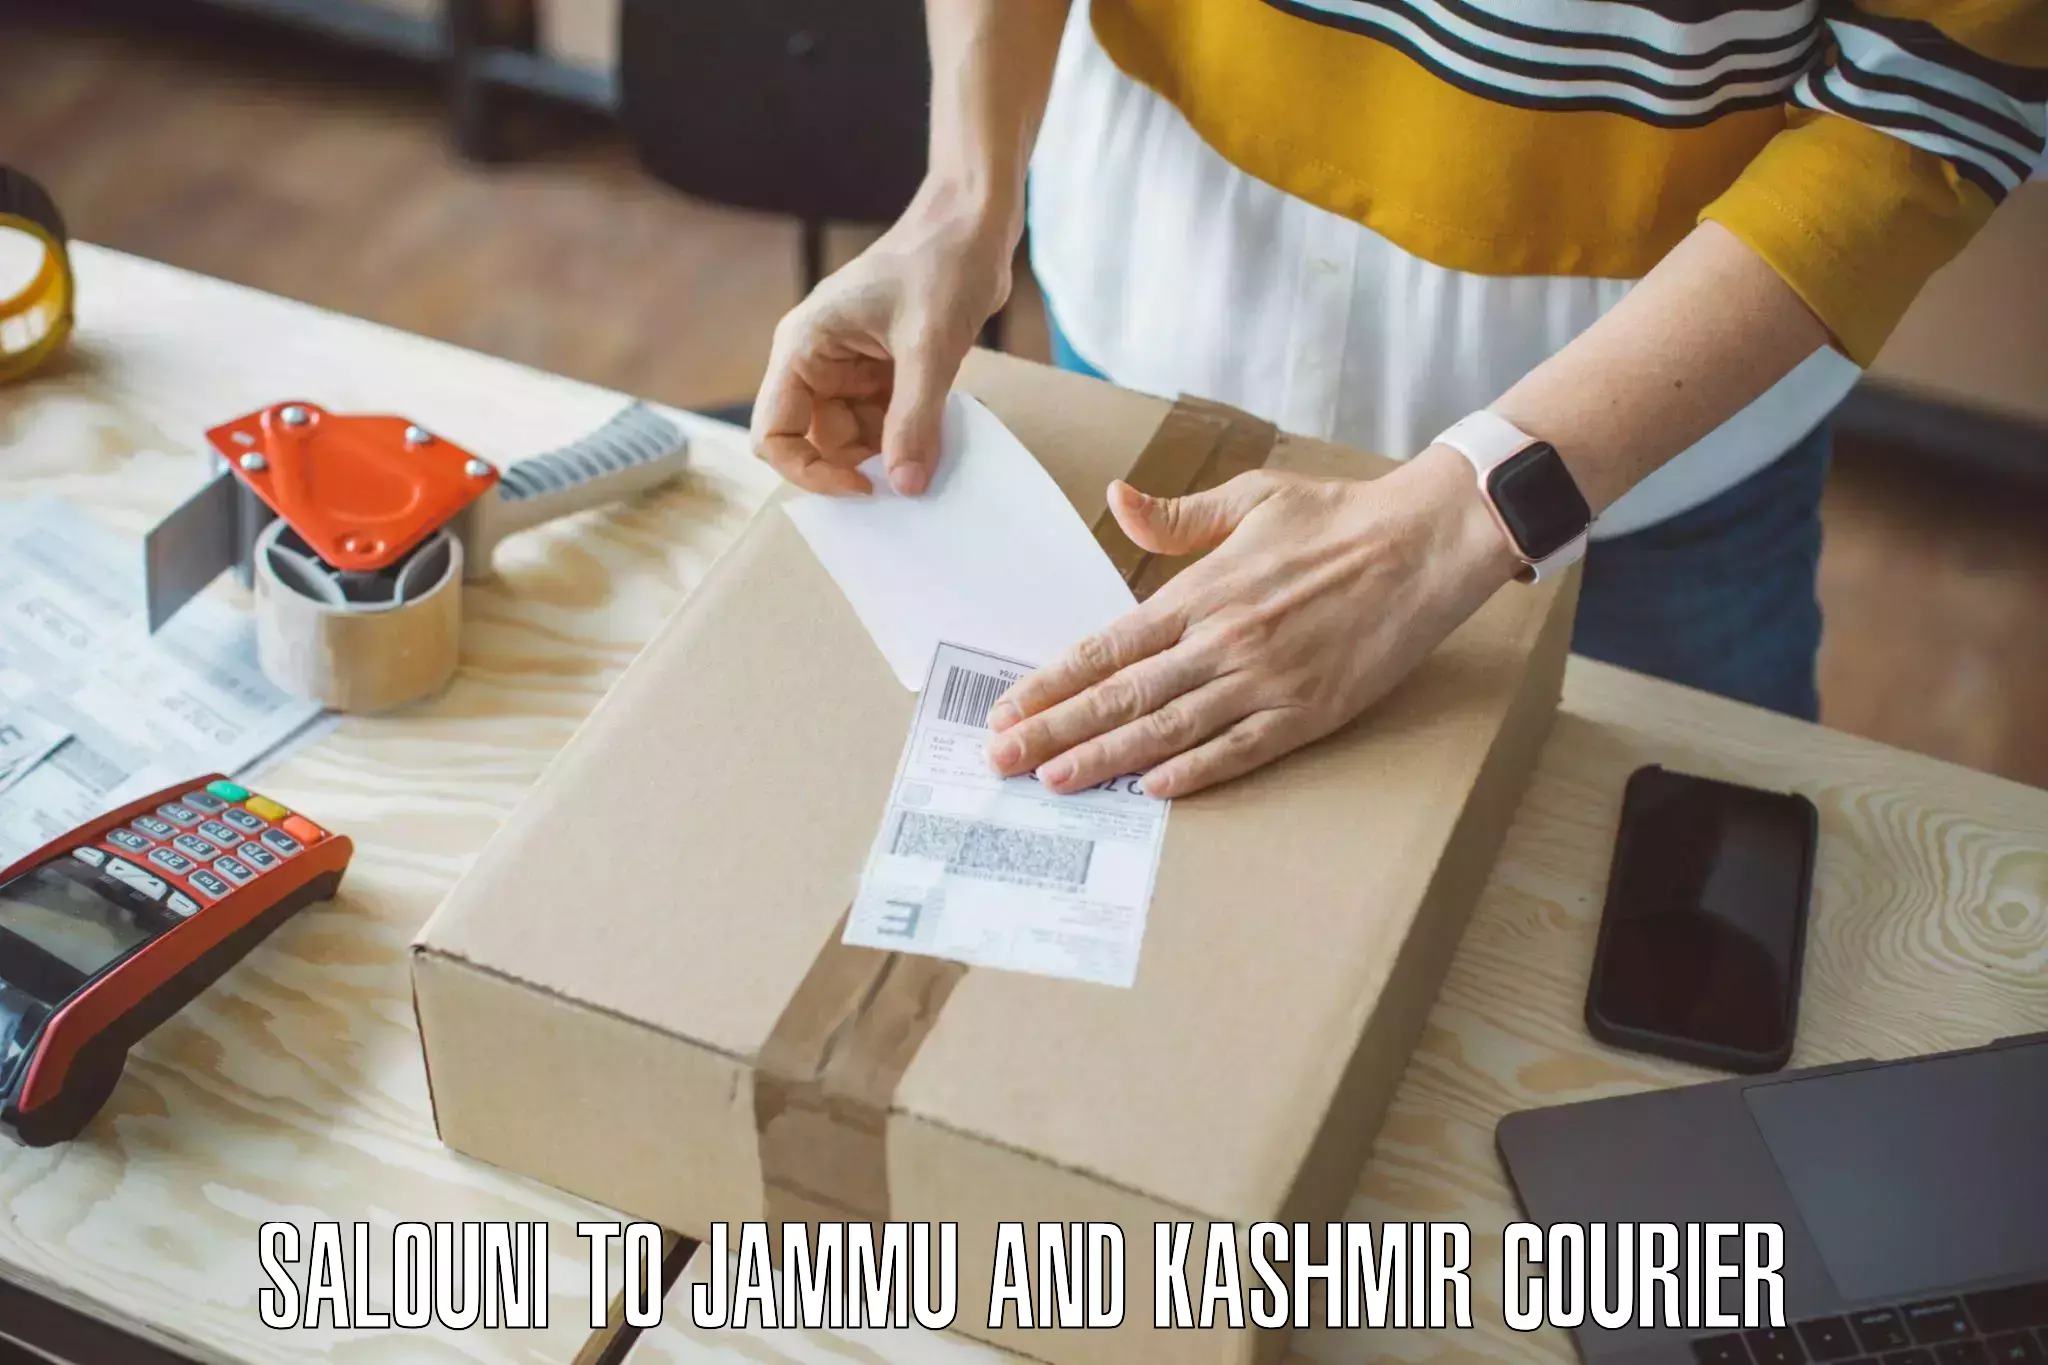 Professional movers and packers Salouni to University of Kashmir Srinagar